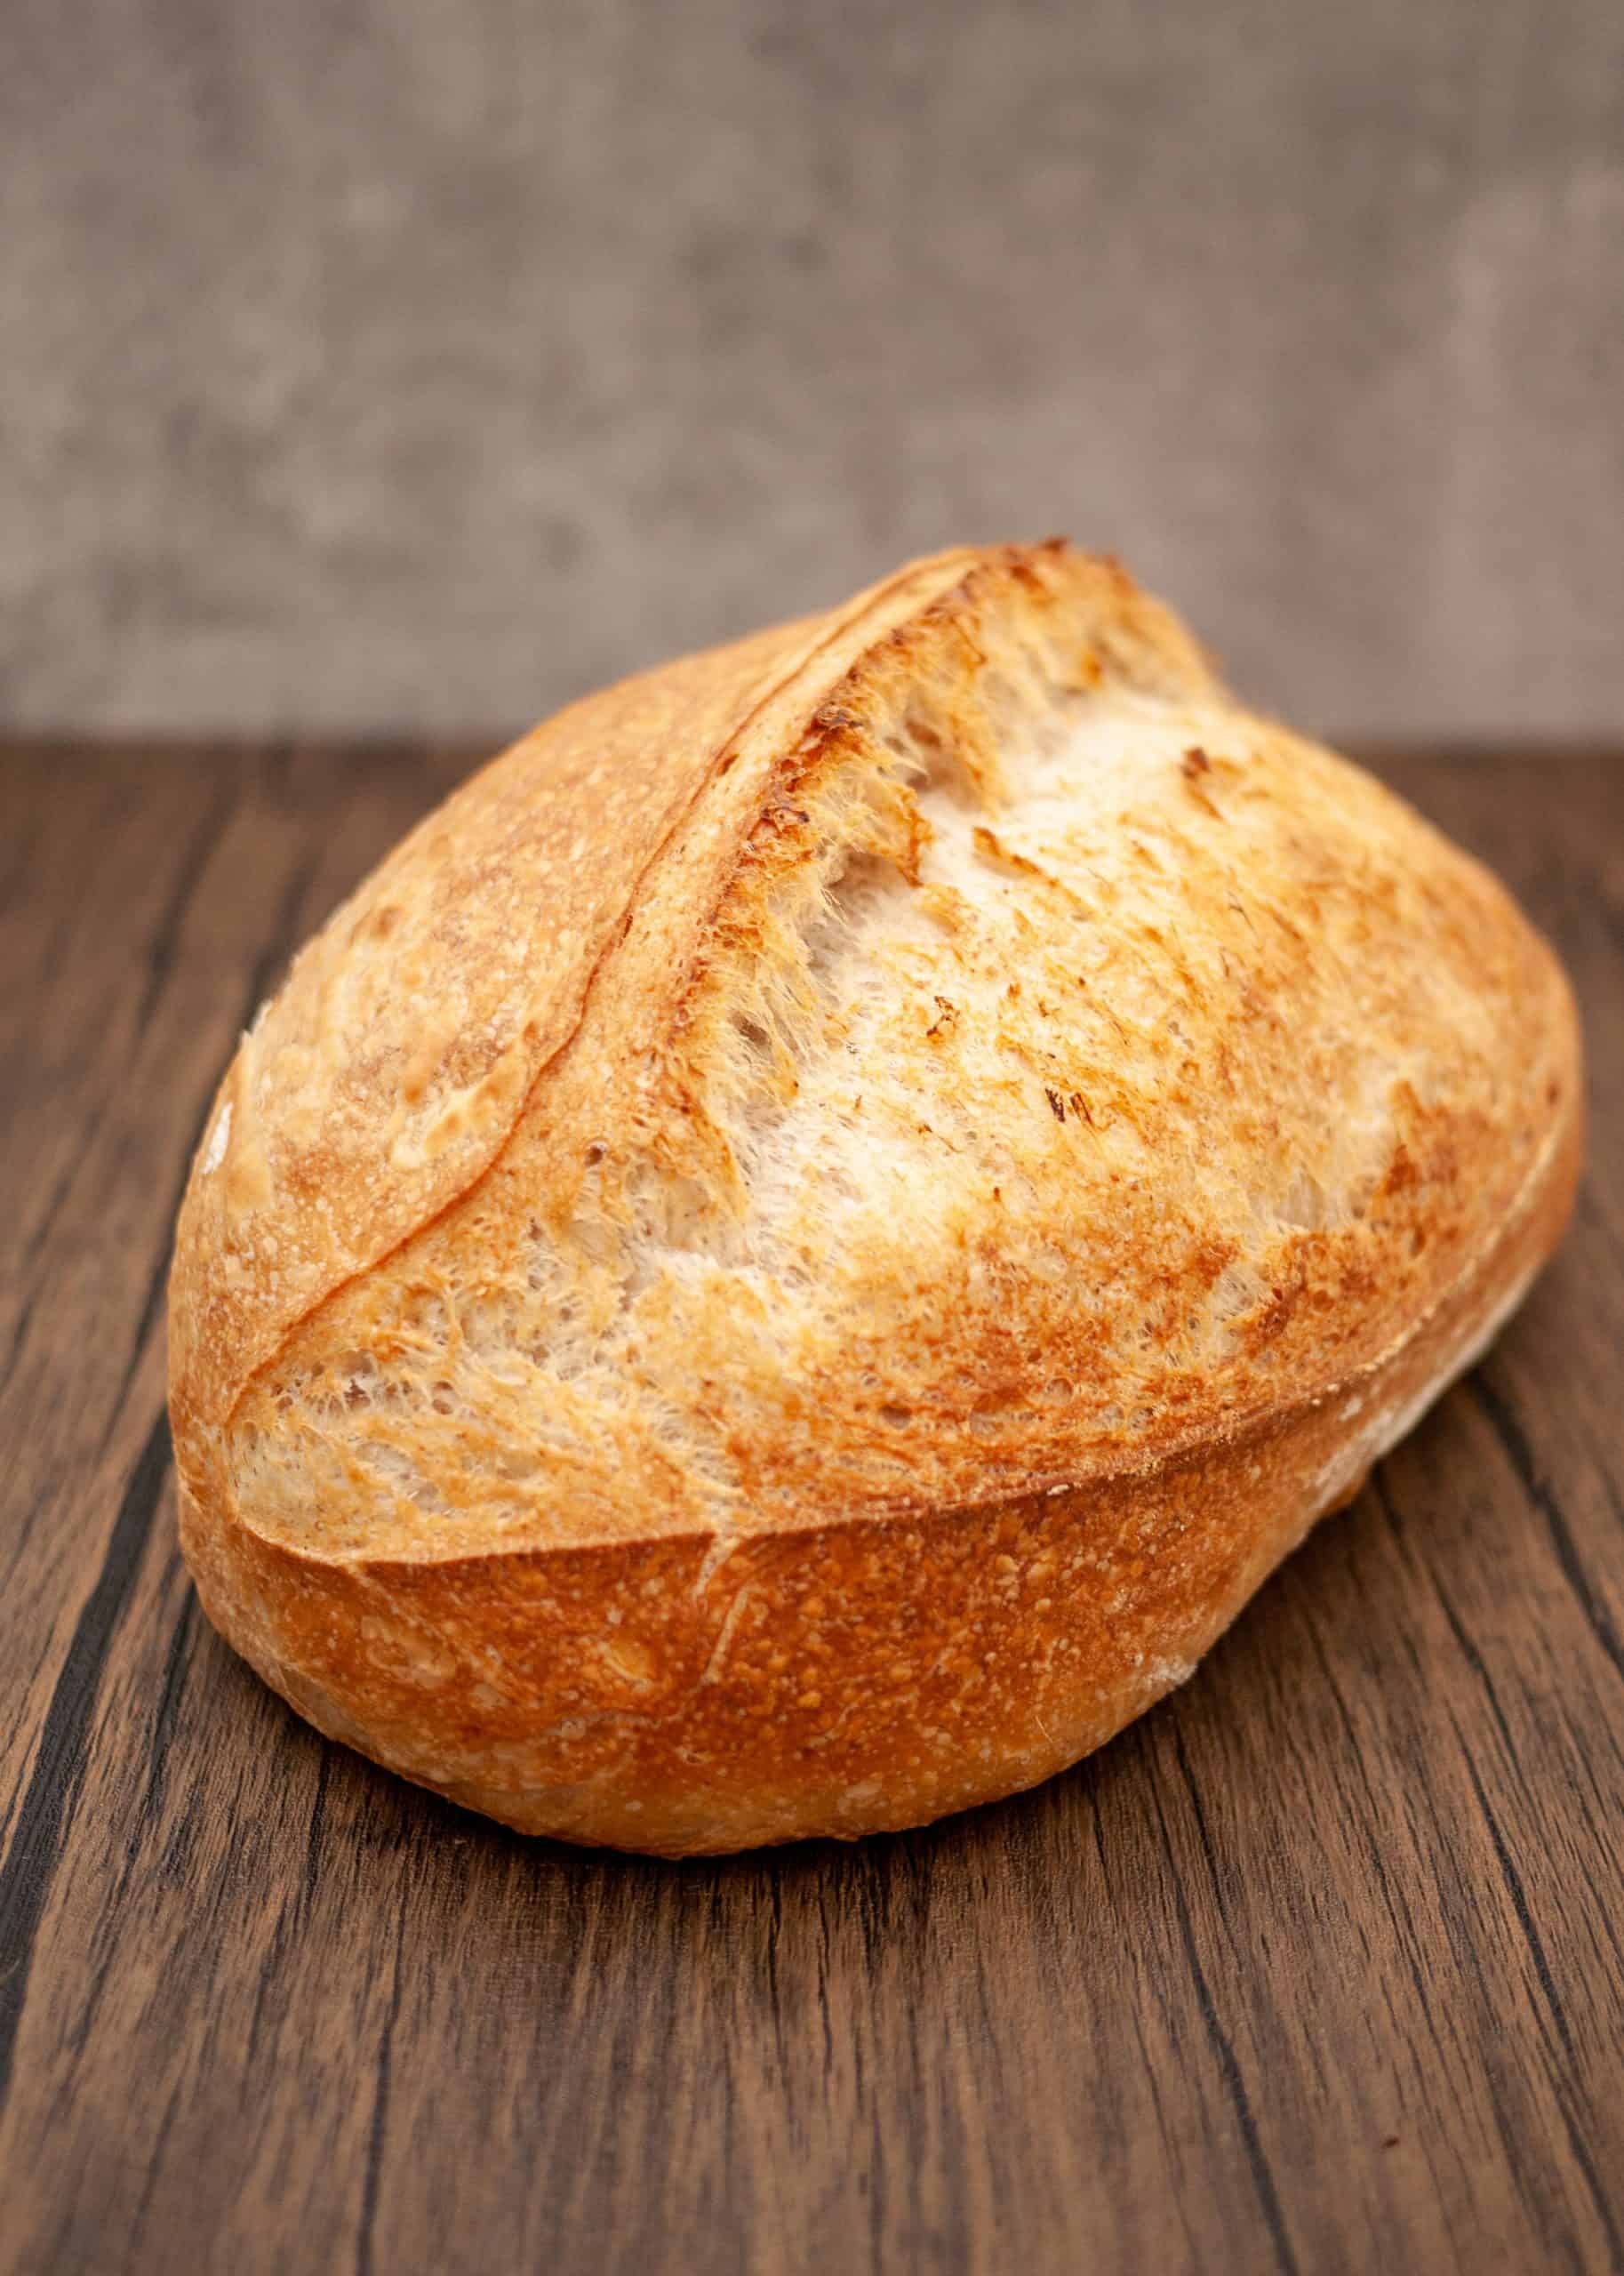 https://www.mygreekdish.com/wp-content/uploads/2021/03/Easy-Sourdough-Bread-recipe-with-Starter-prozimi-2-scaled.jpg